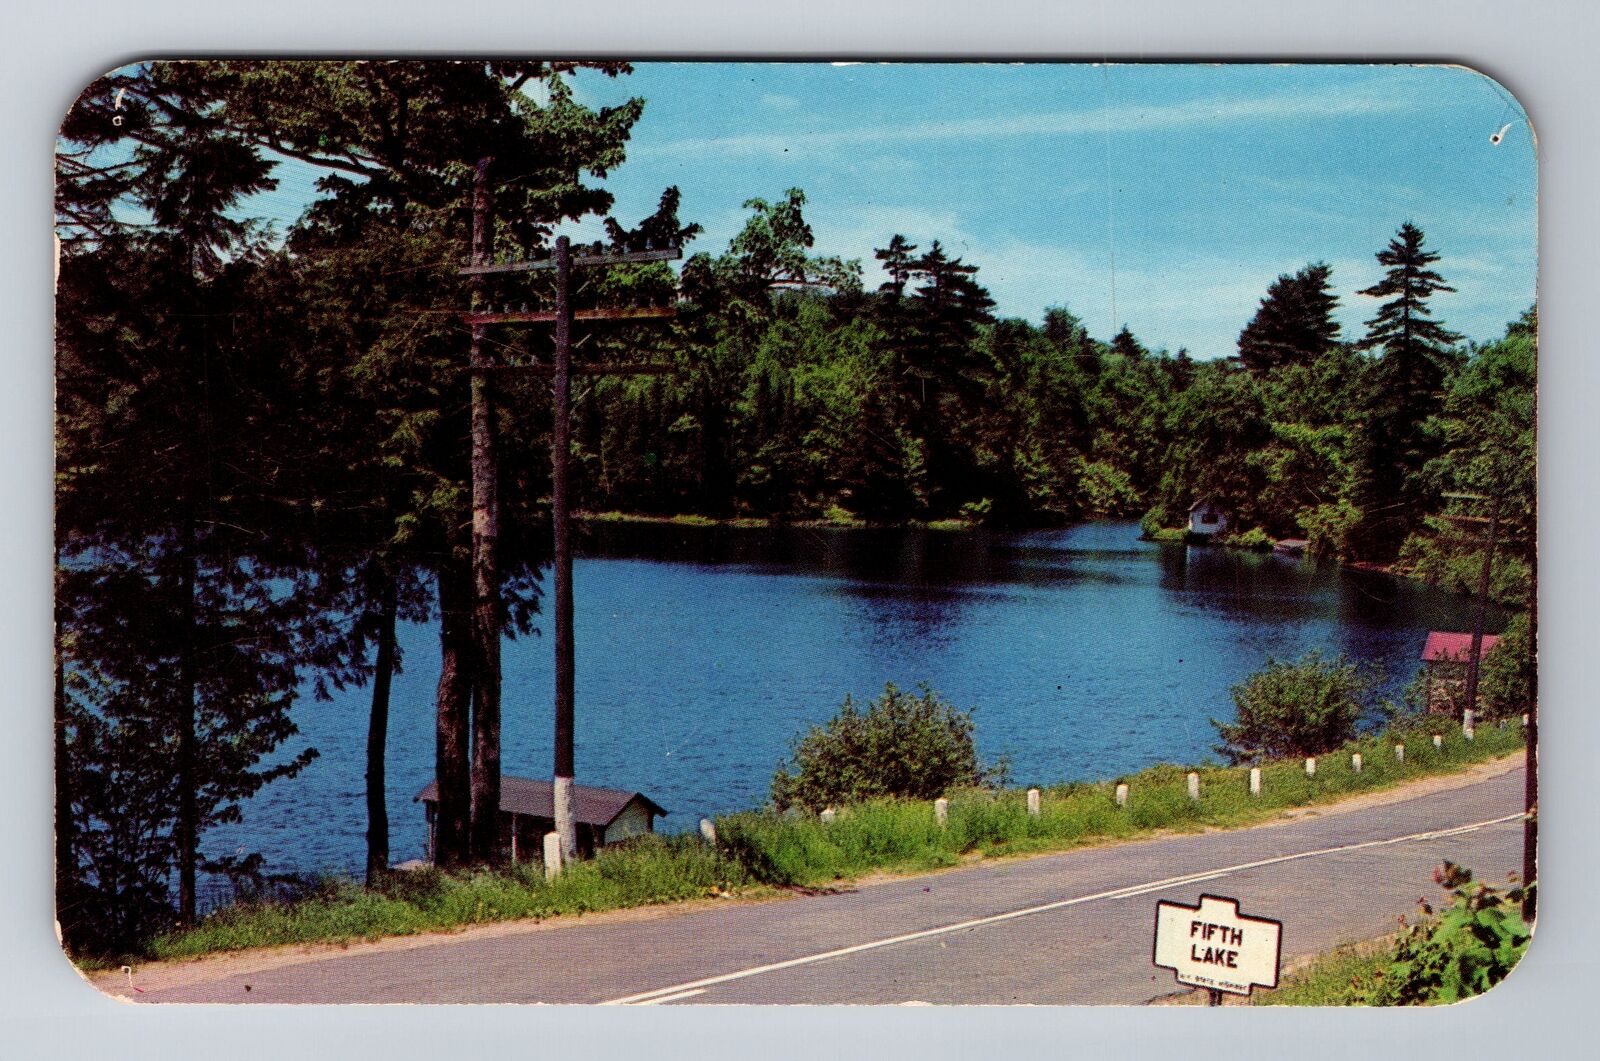 Inlet NY-New York, Fifth Lake, Adirondack Canoe Route, Vintage Souvenir Postcard